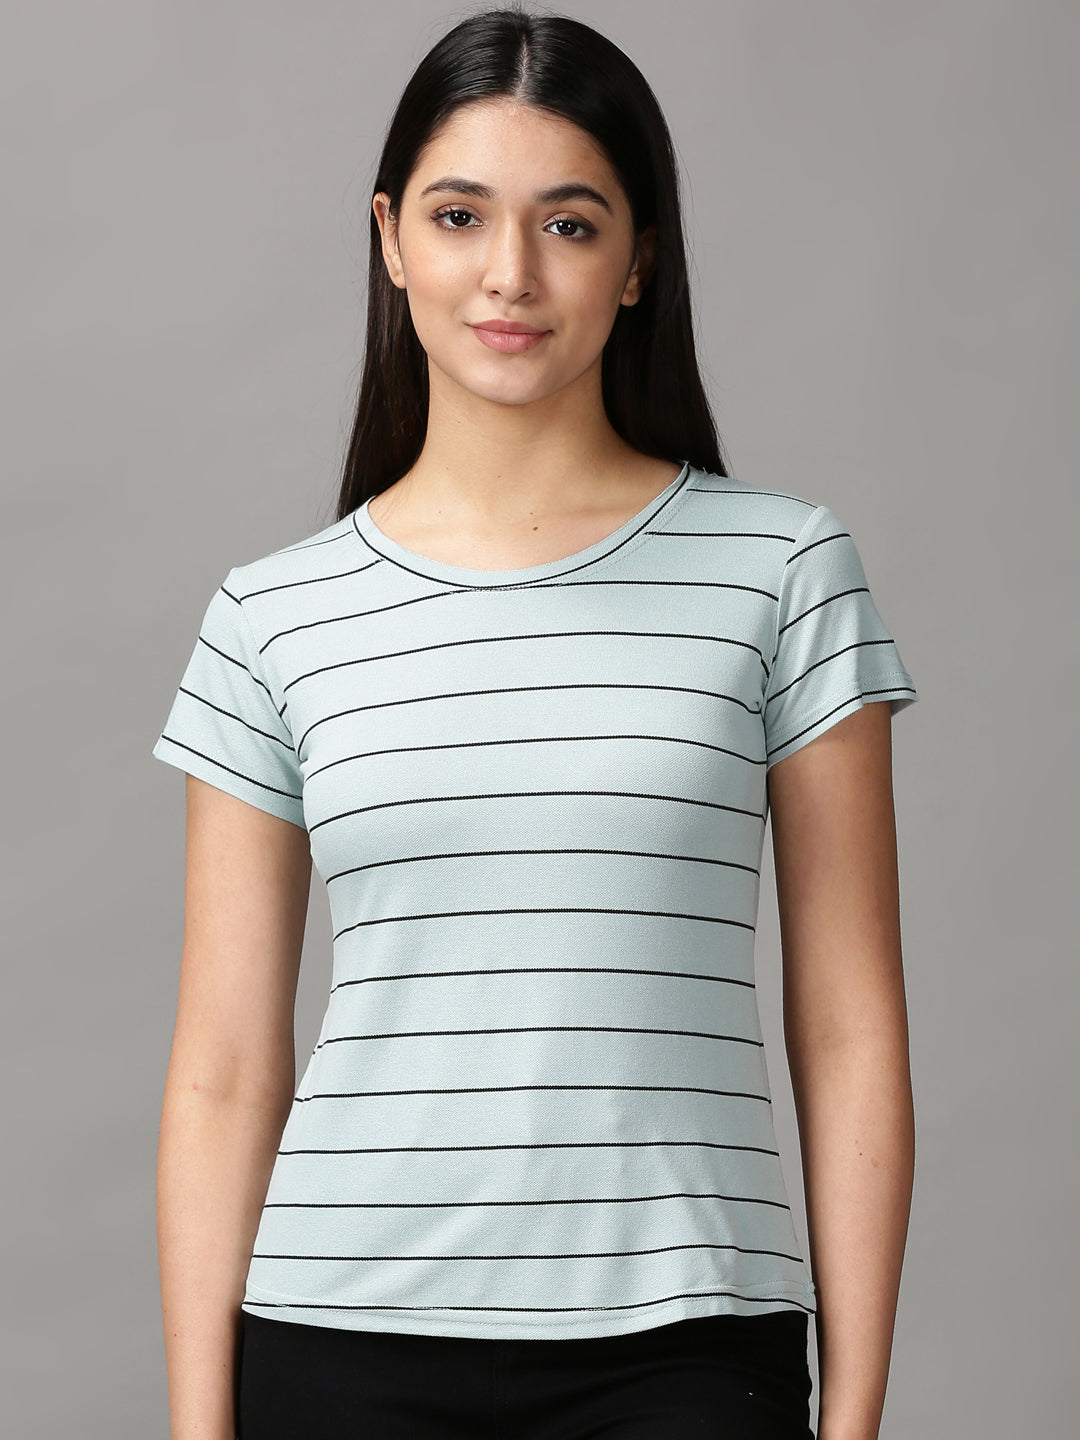 Women's Sea Green Striped Top